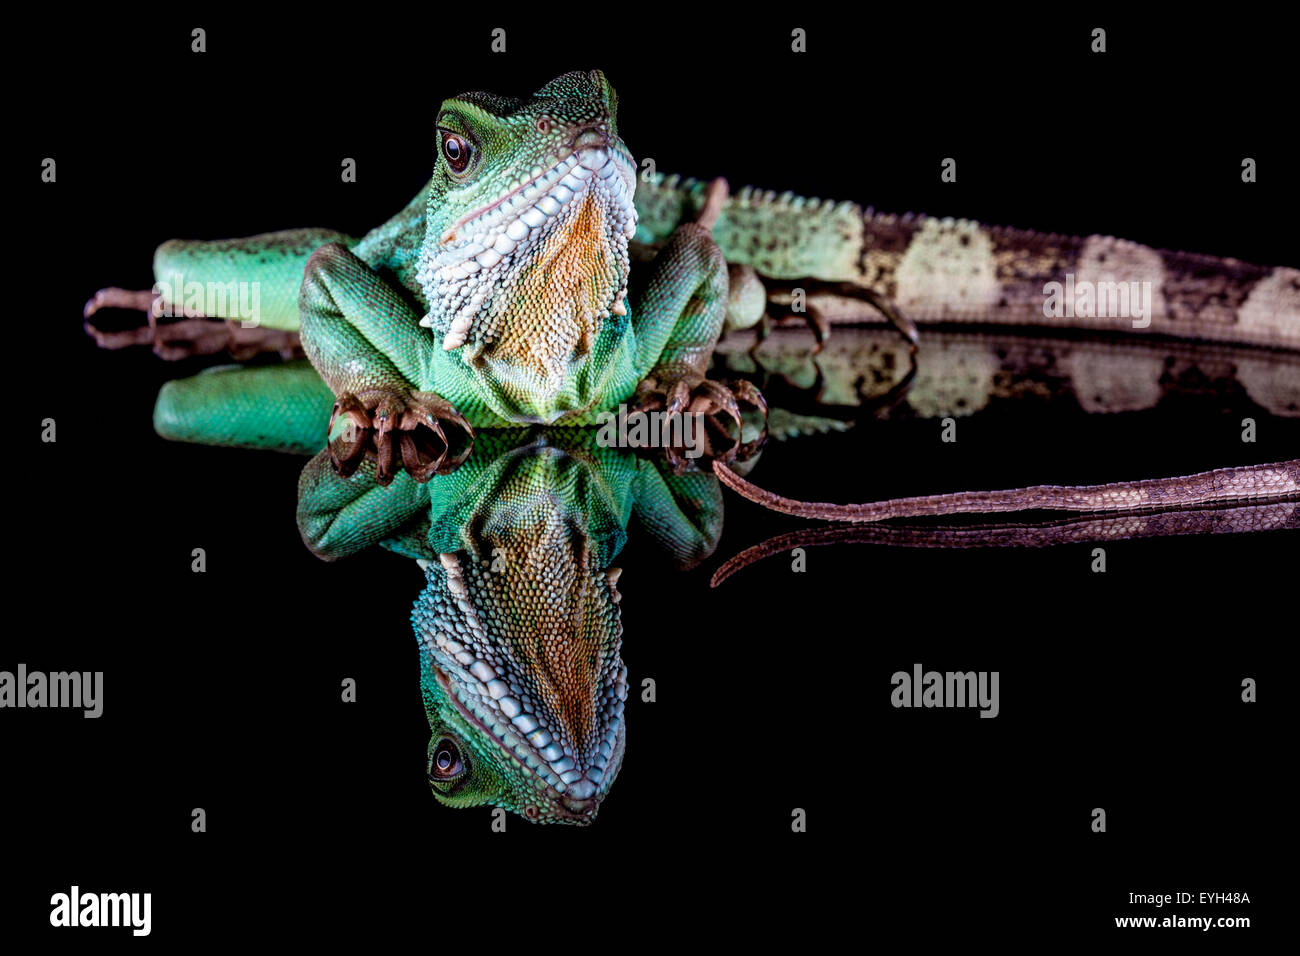 Chinese Water Dragon, Physignathus cocincinus Stockfoto